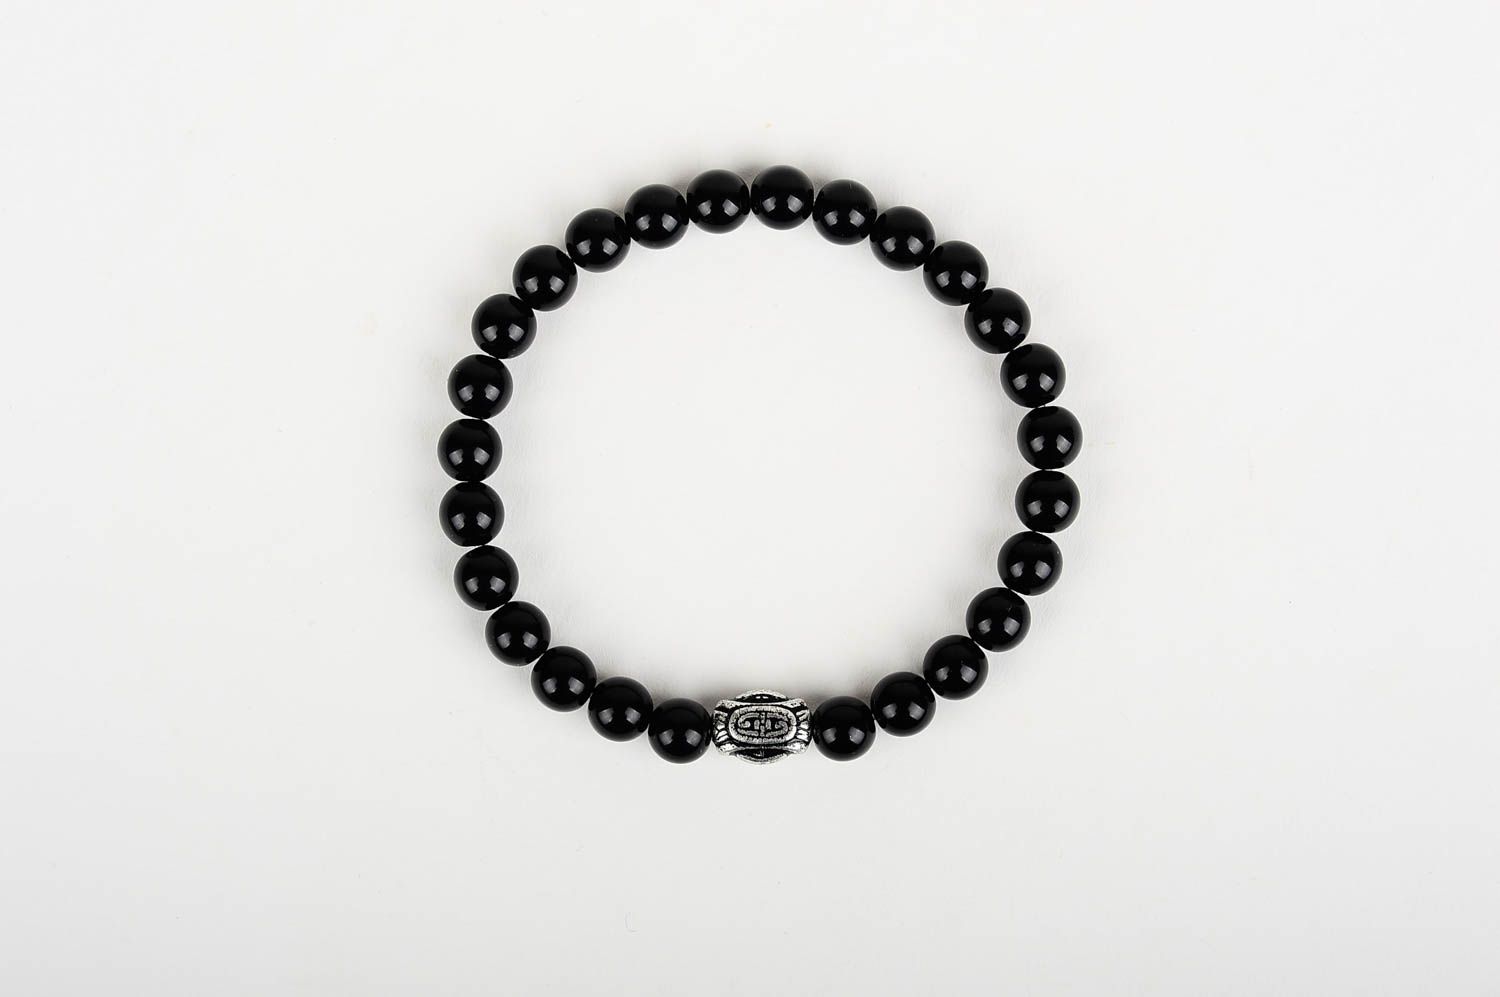 Handmade black beads stretchy bracelet with metal centerpiece charm for women photo 1